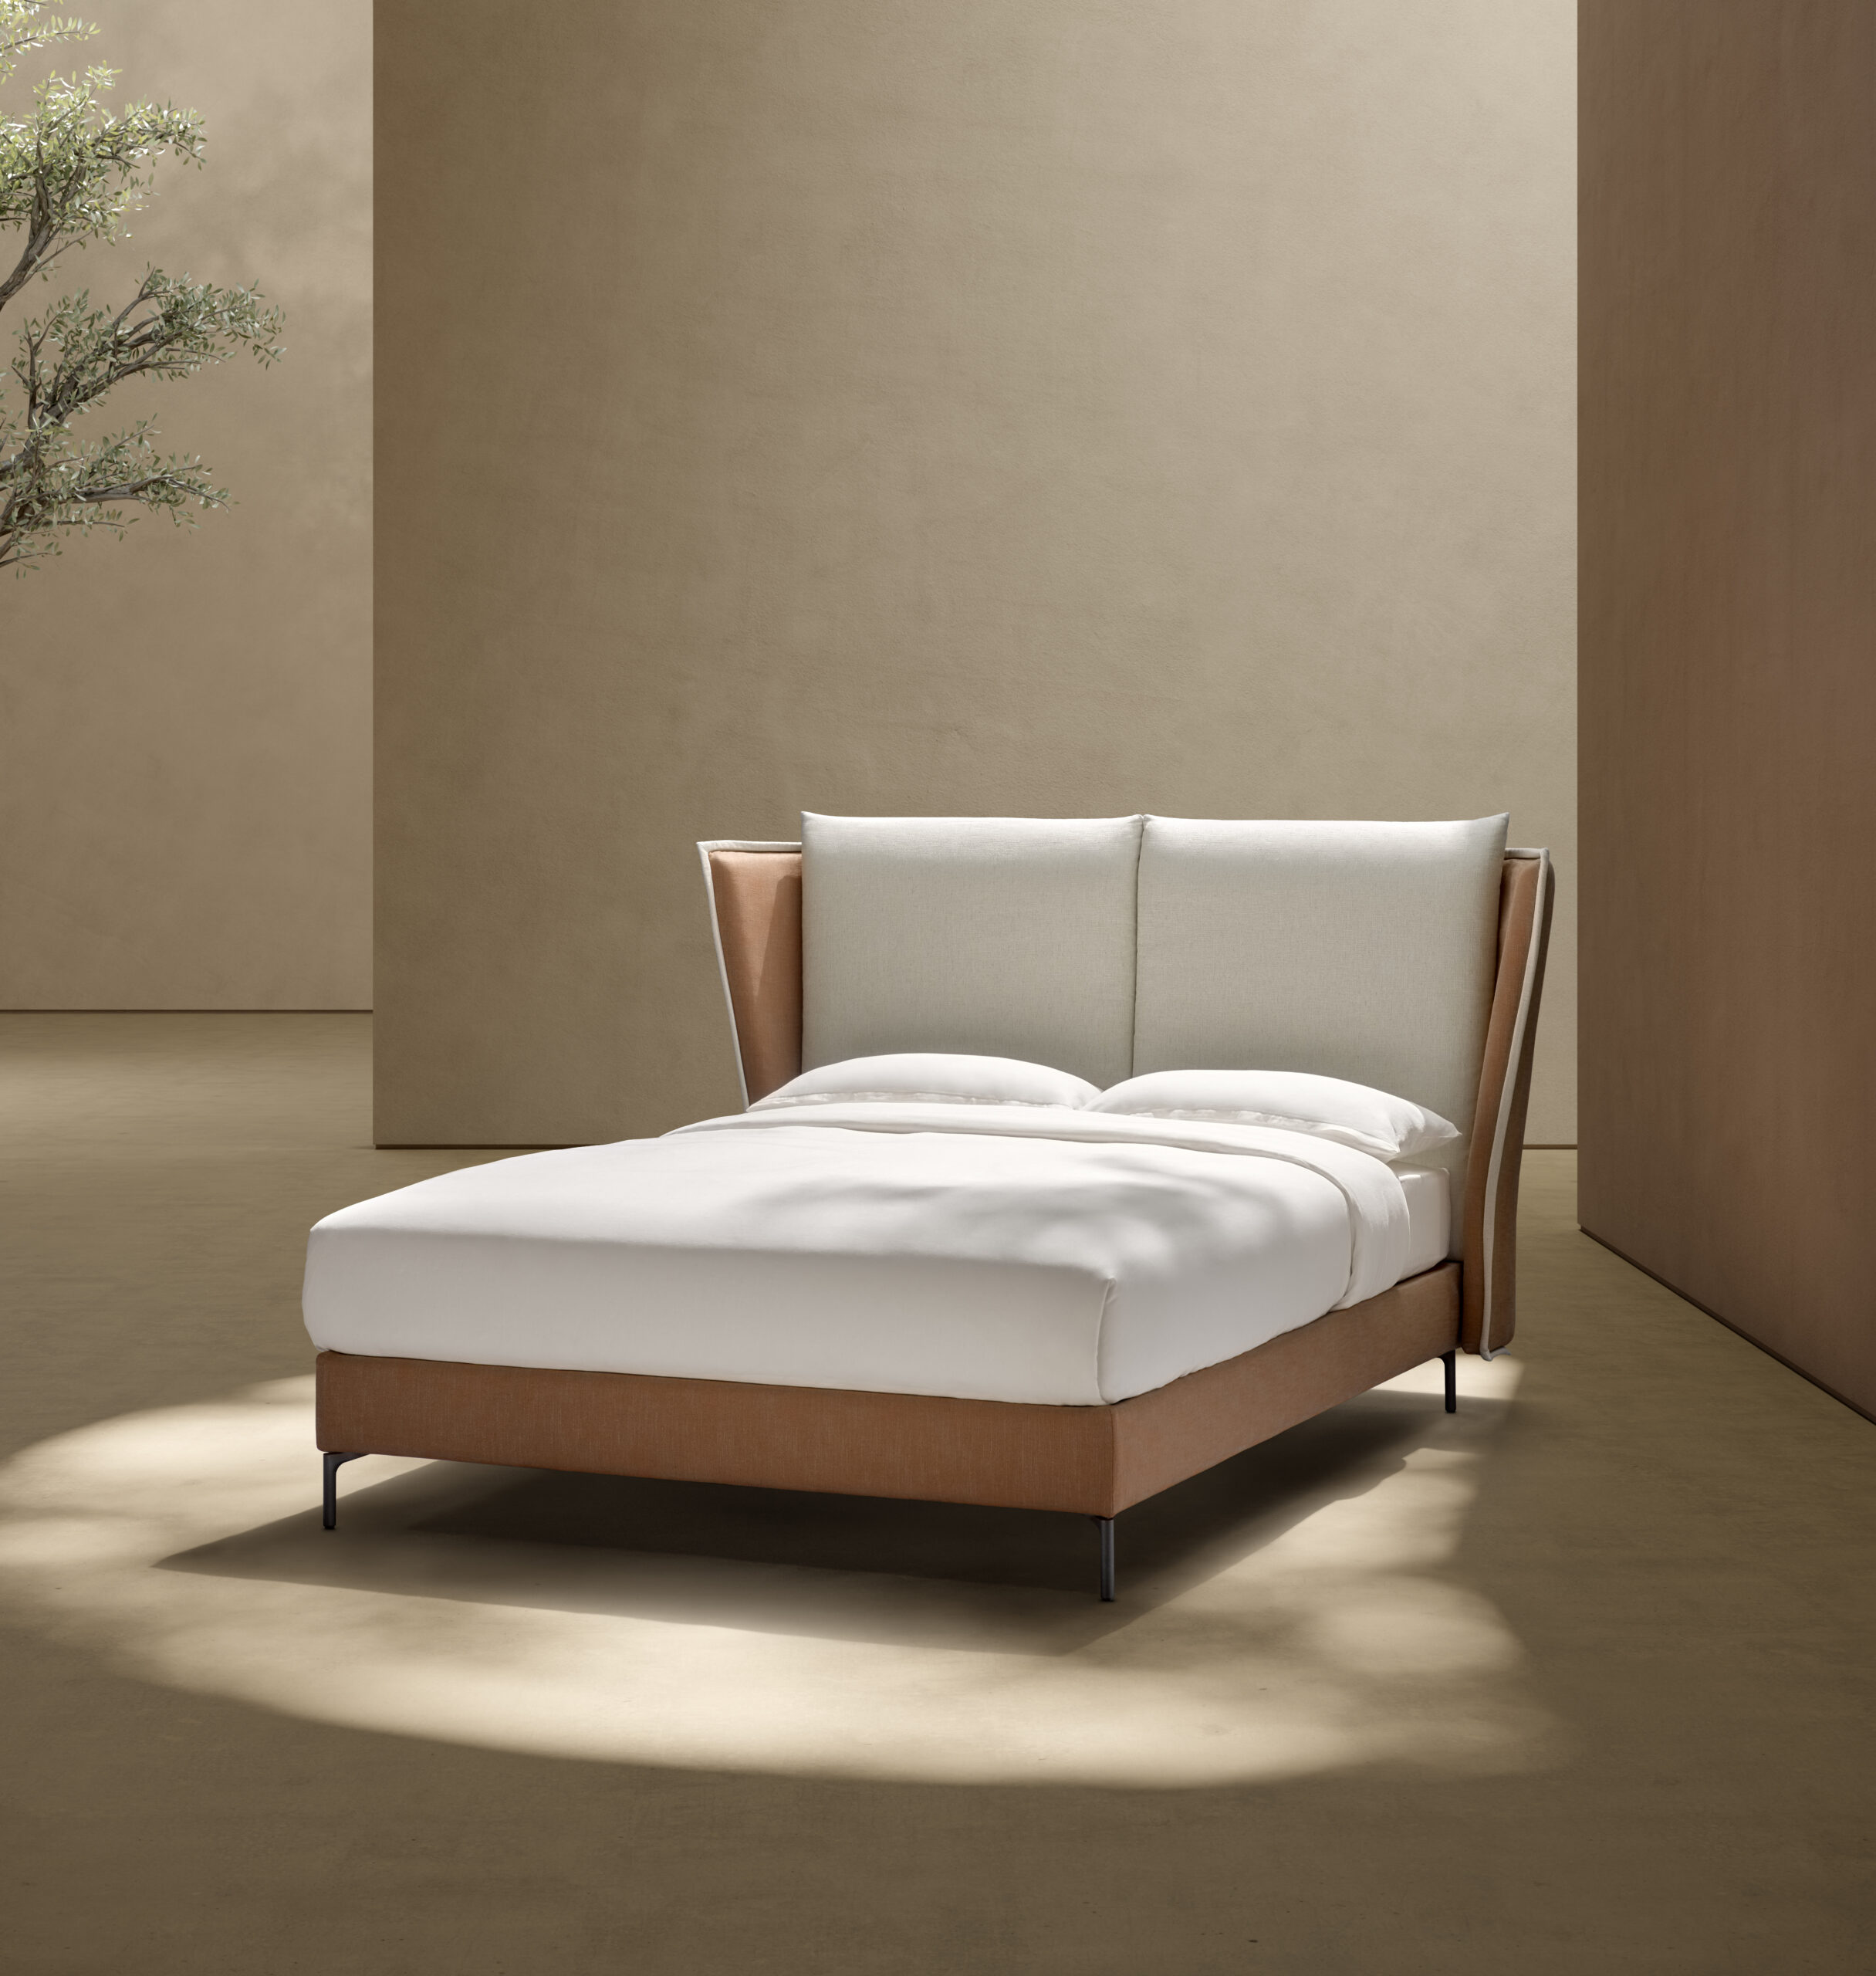 Vela Bed designed by Debiasi Sandri for Schramm